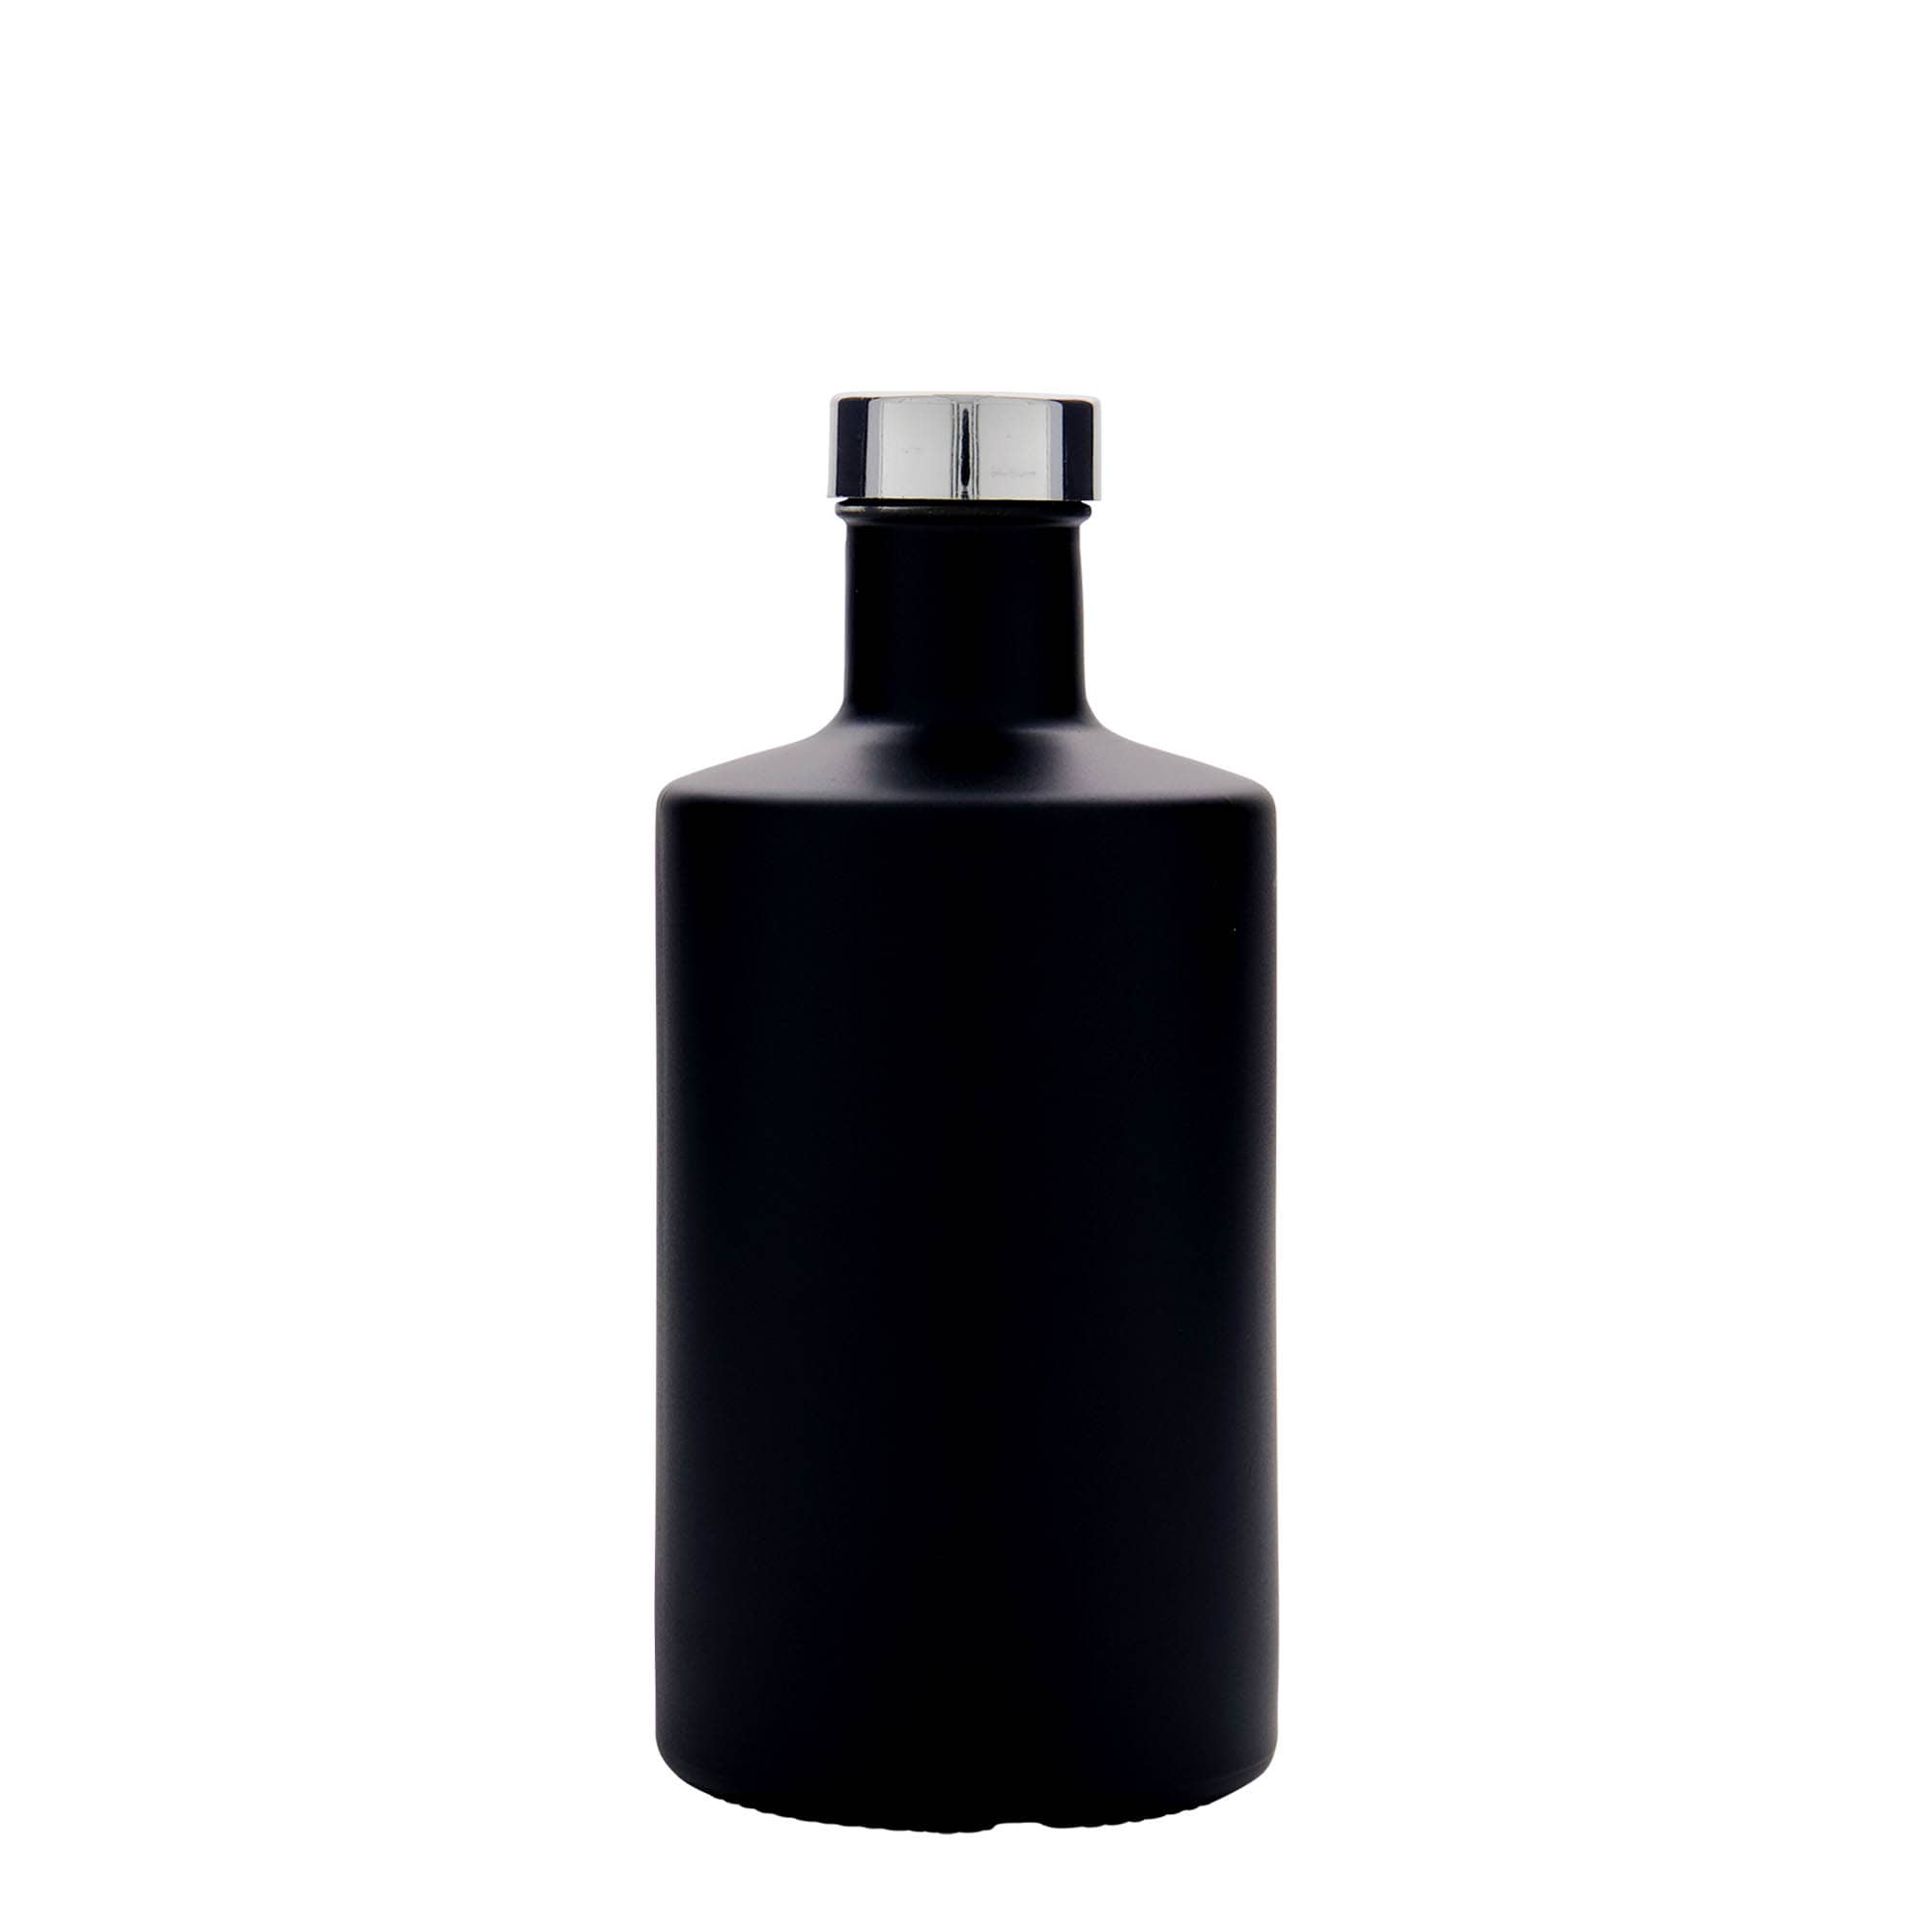 500 ml glass bottle 'Caroline', black, closure: GPI 33